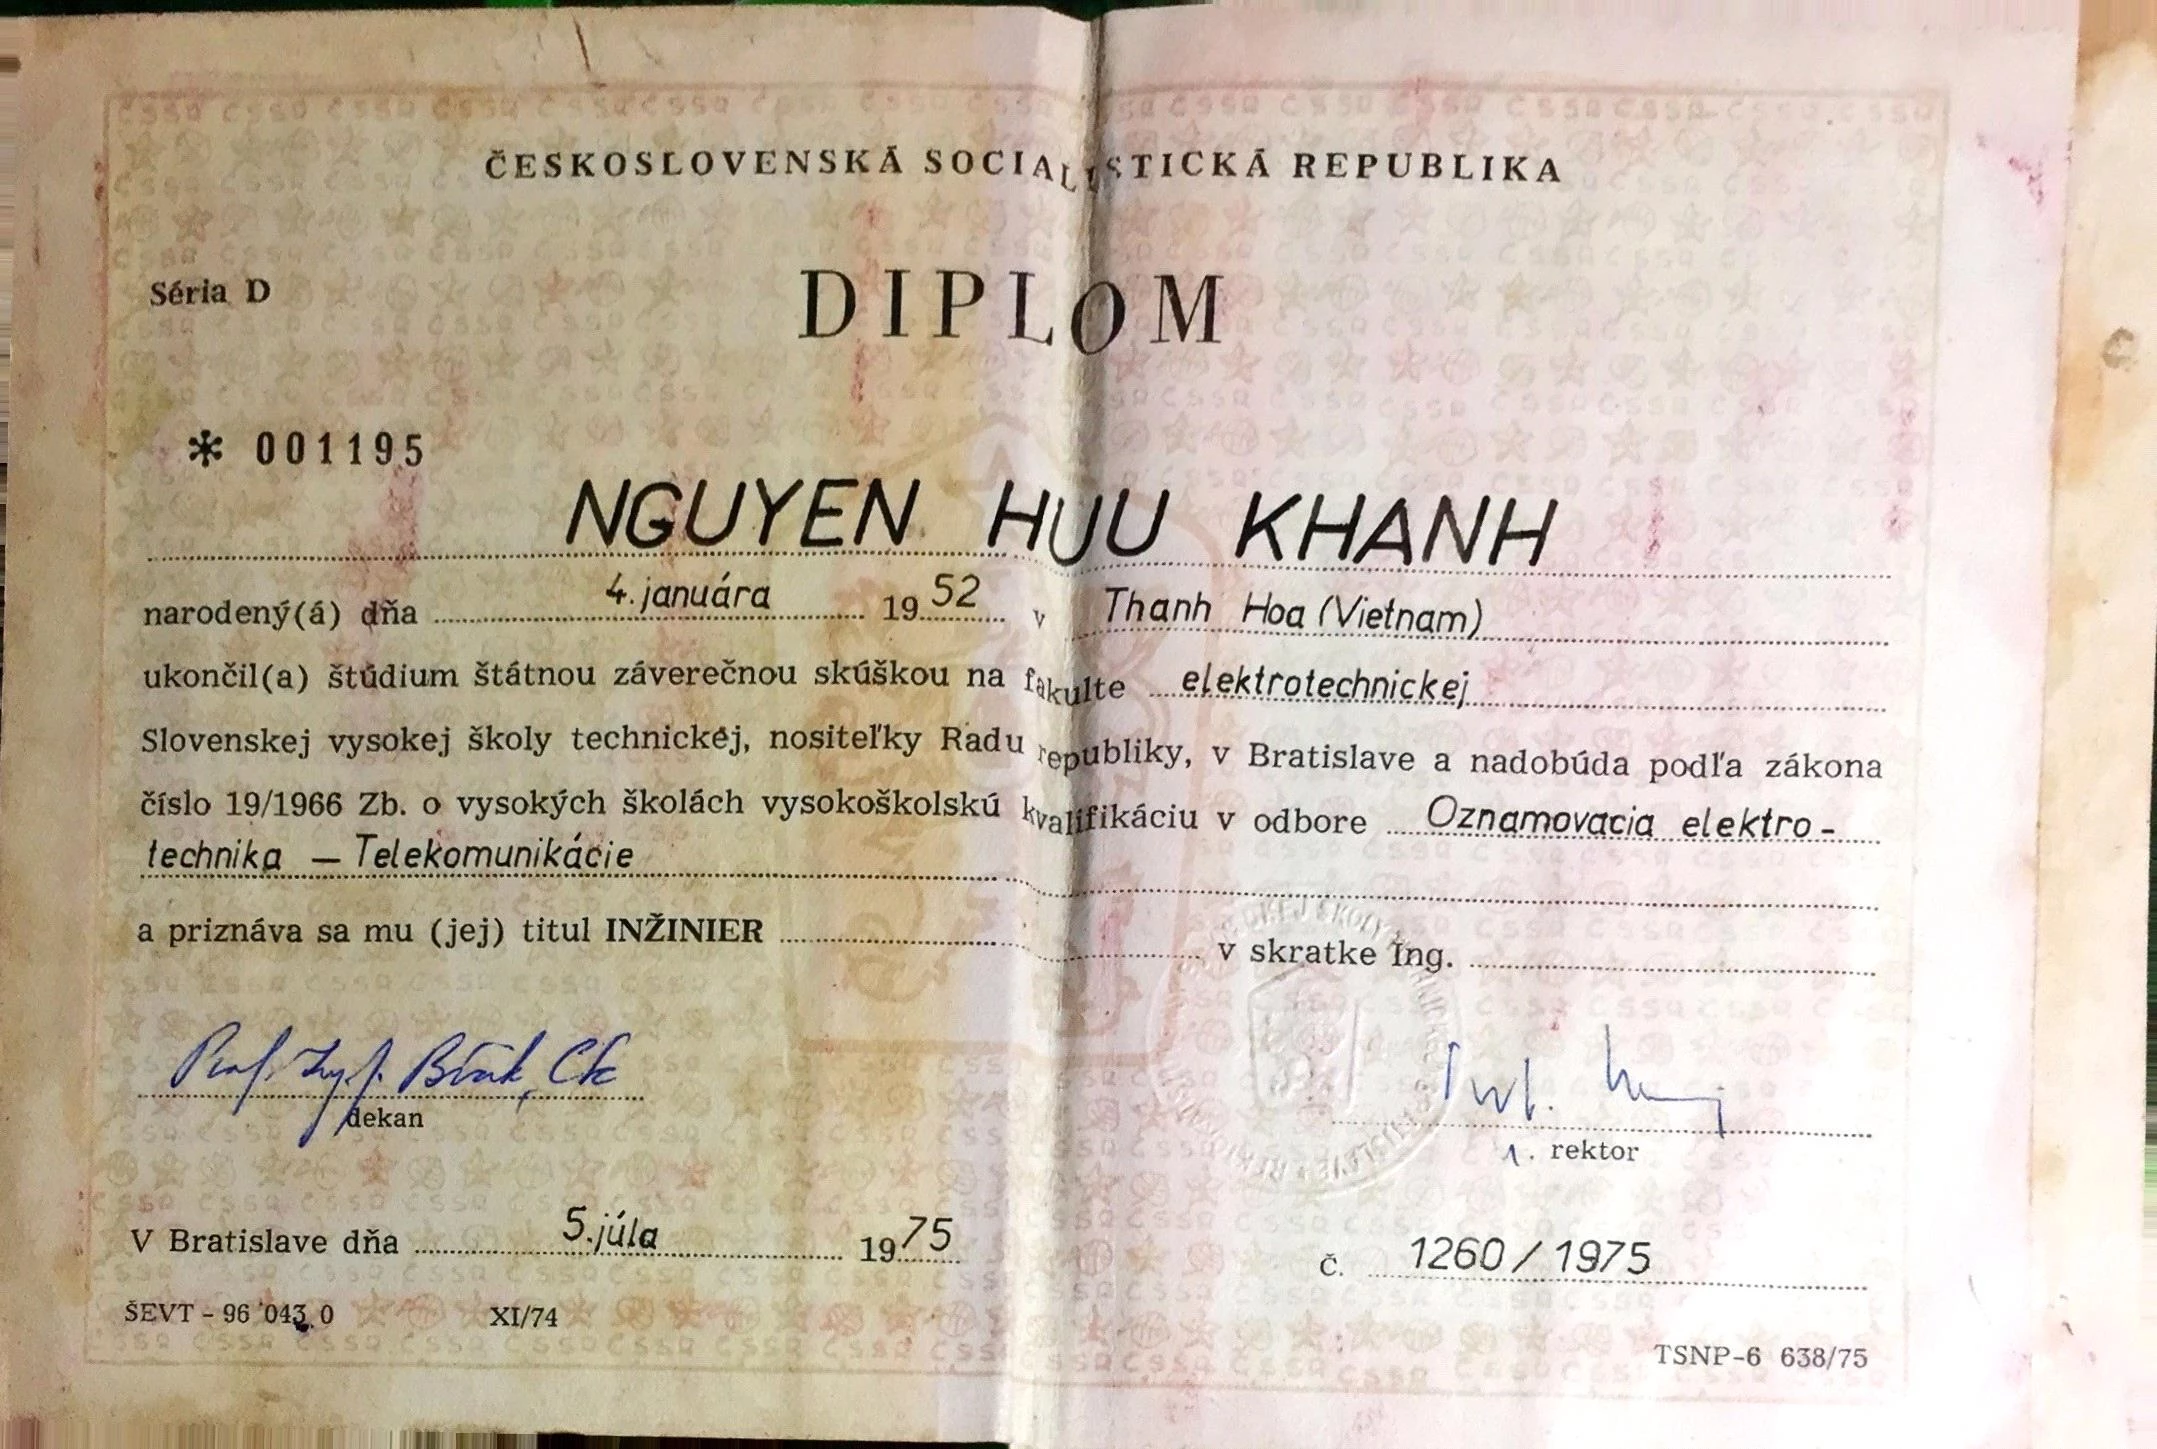 121-khanhs-university-diploma.jpg